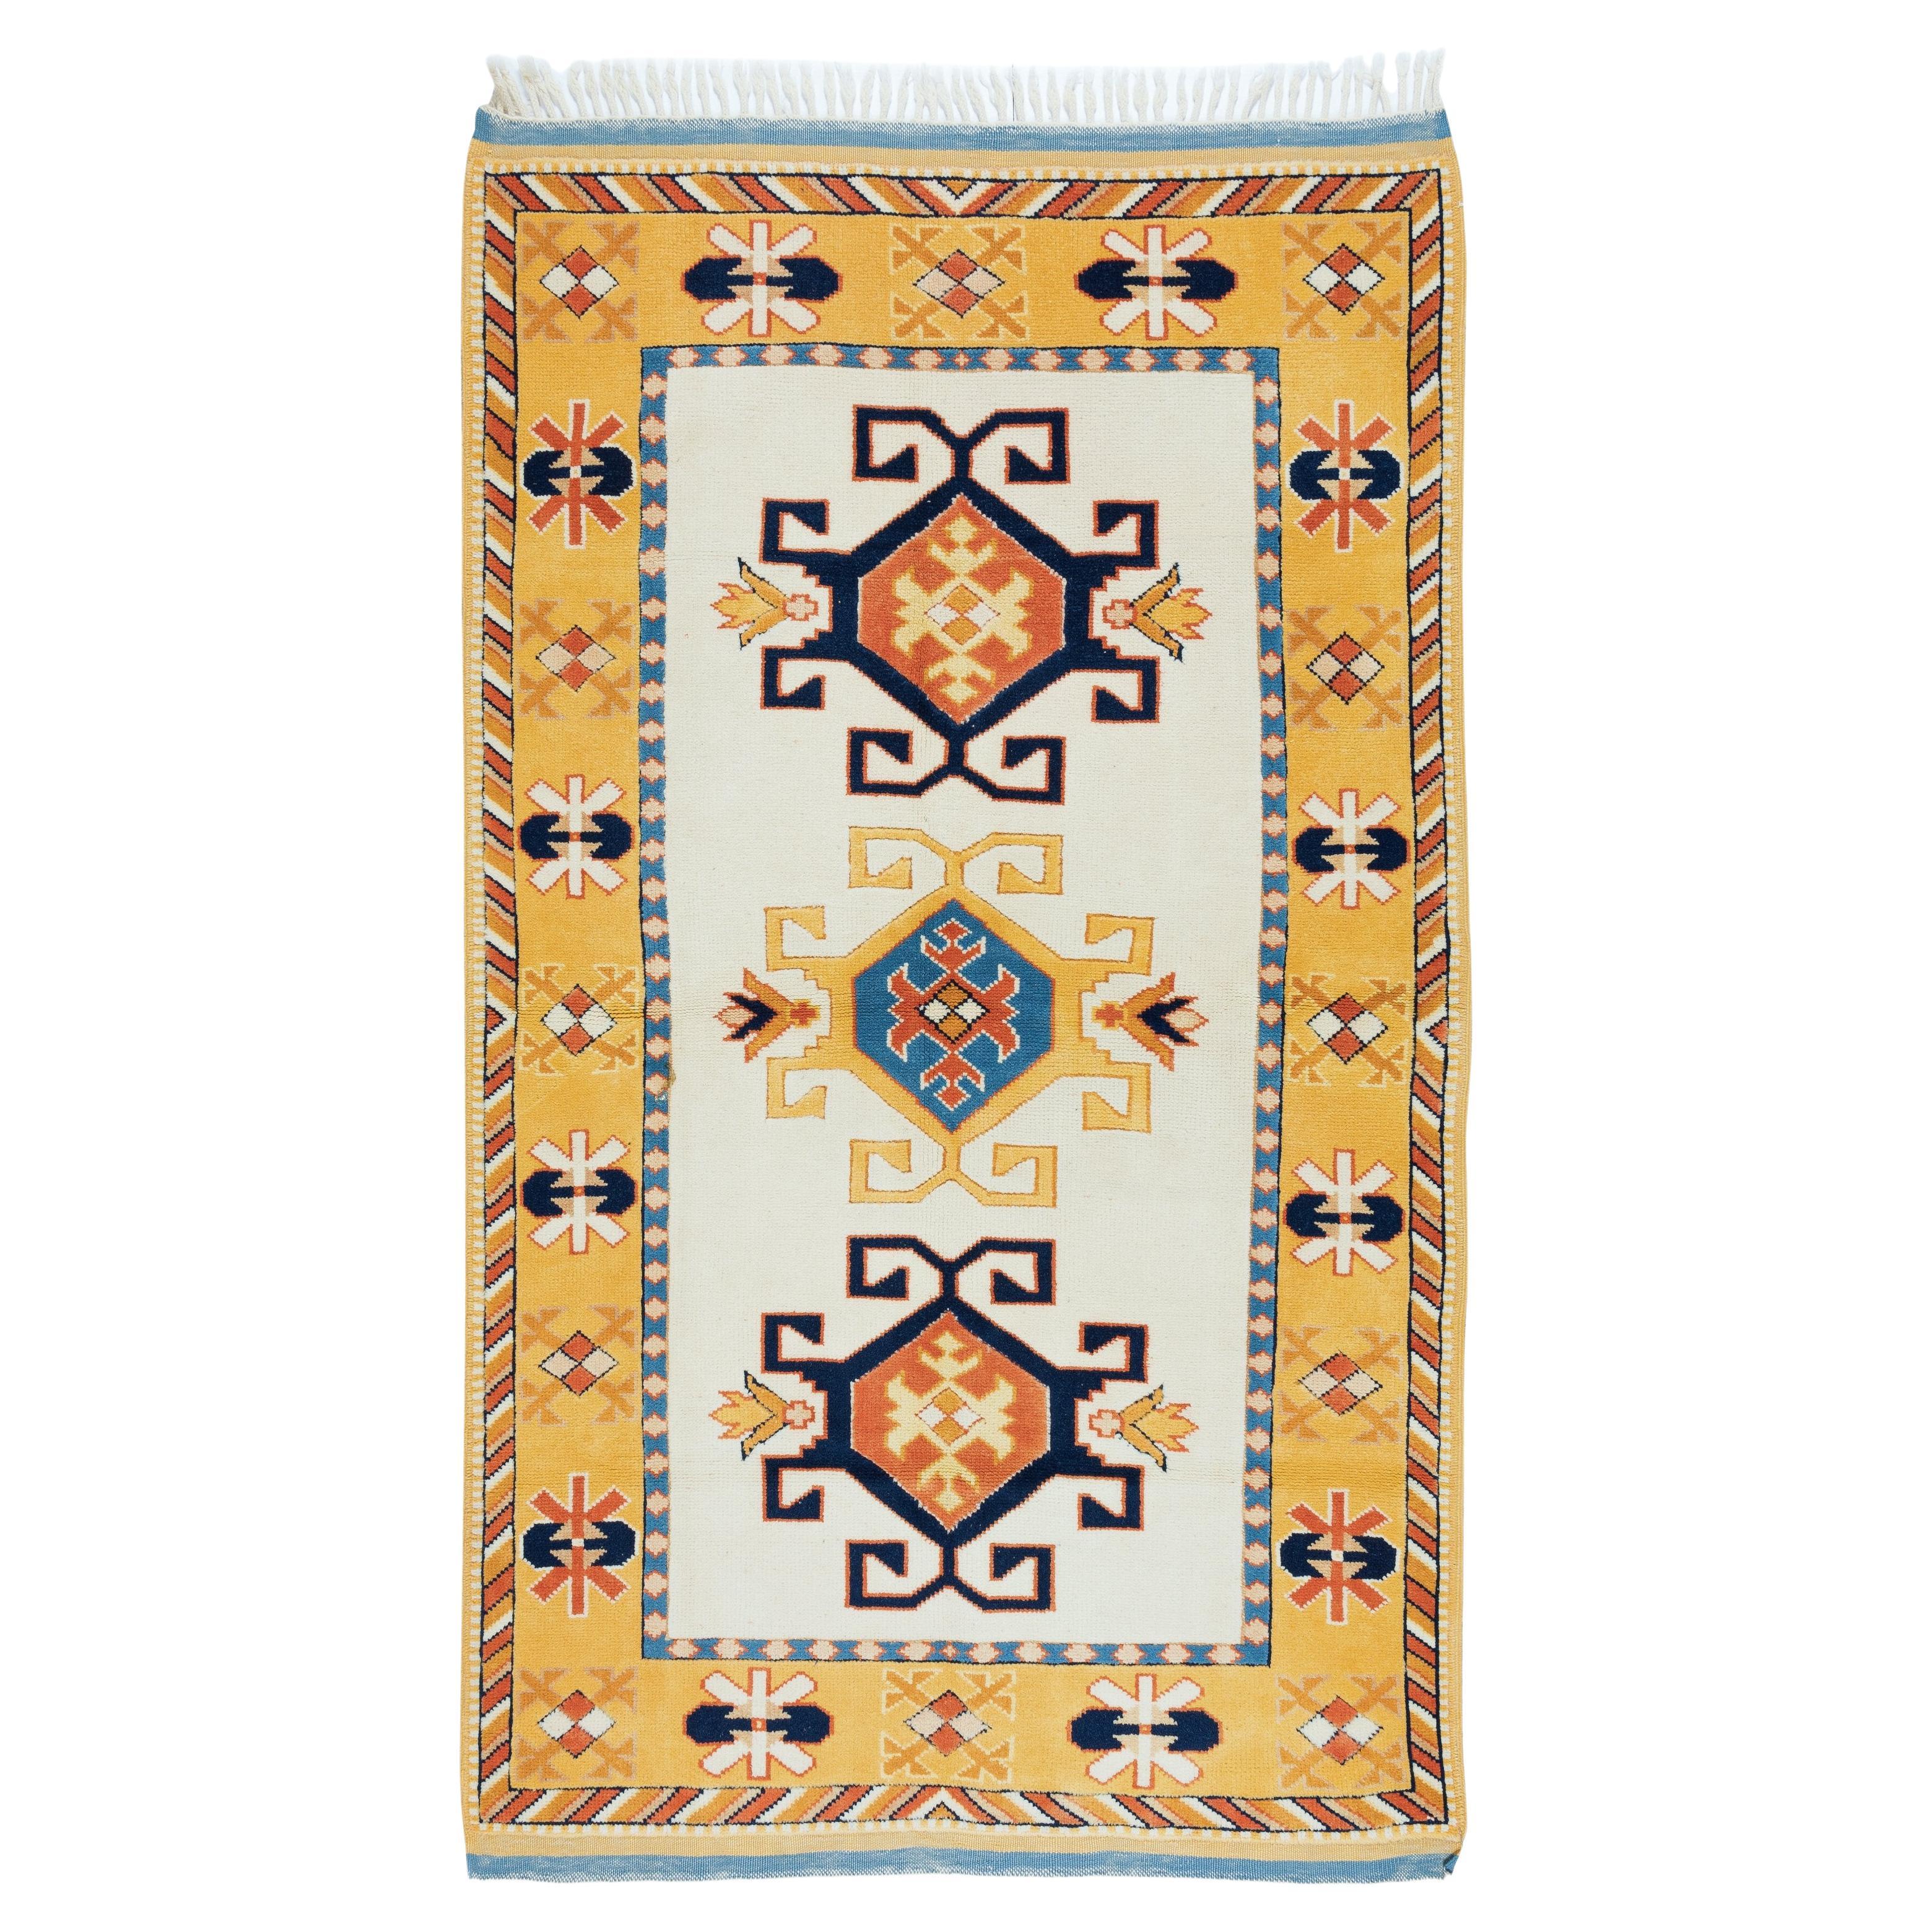 4x6 Ft Vintage Handmade Turkish Wool Rug with Geometric Design, Ca 1970